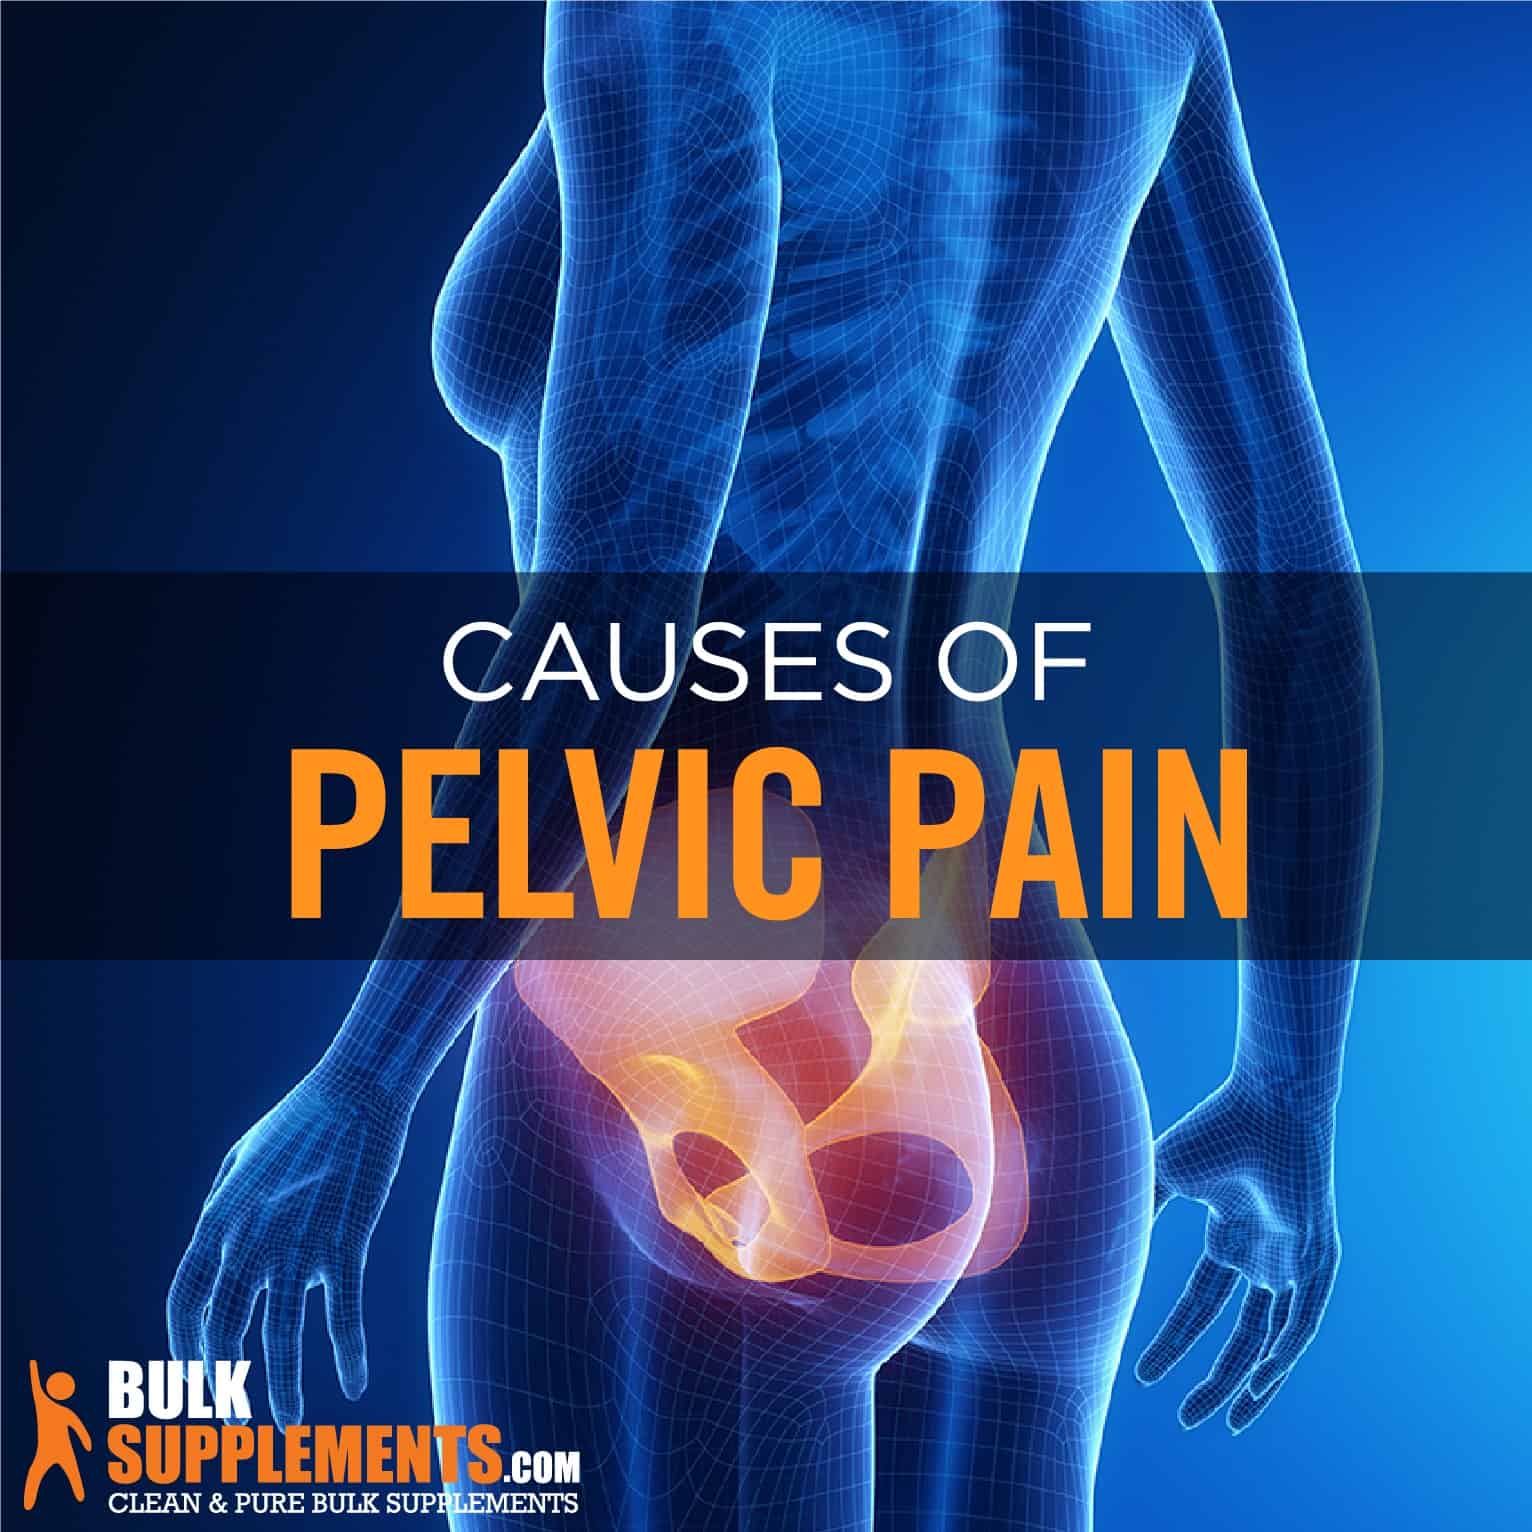 What is a pubic bone problem?